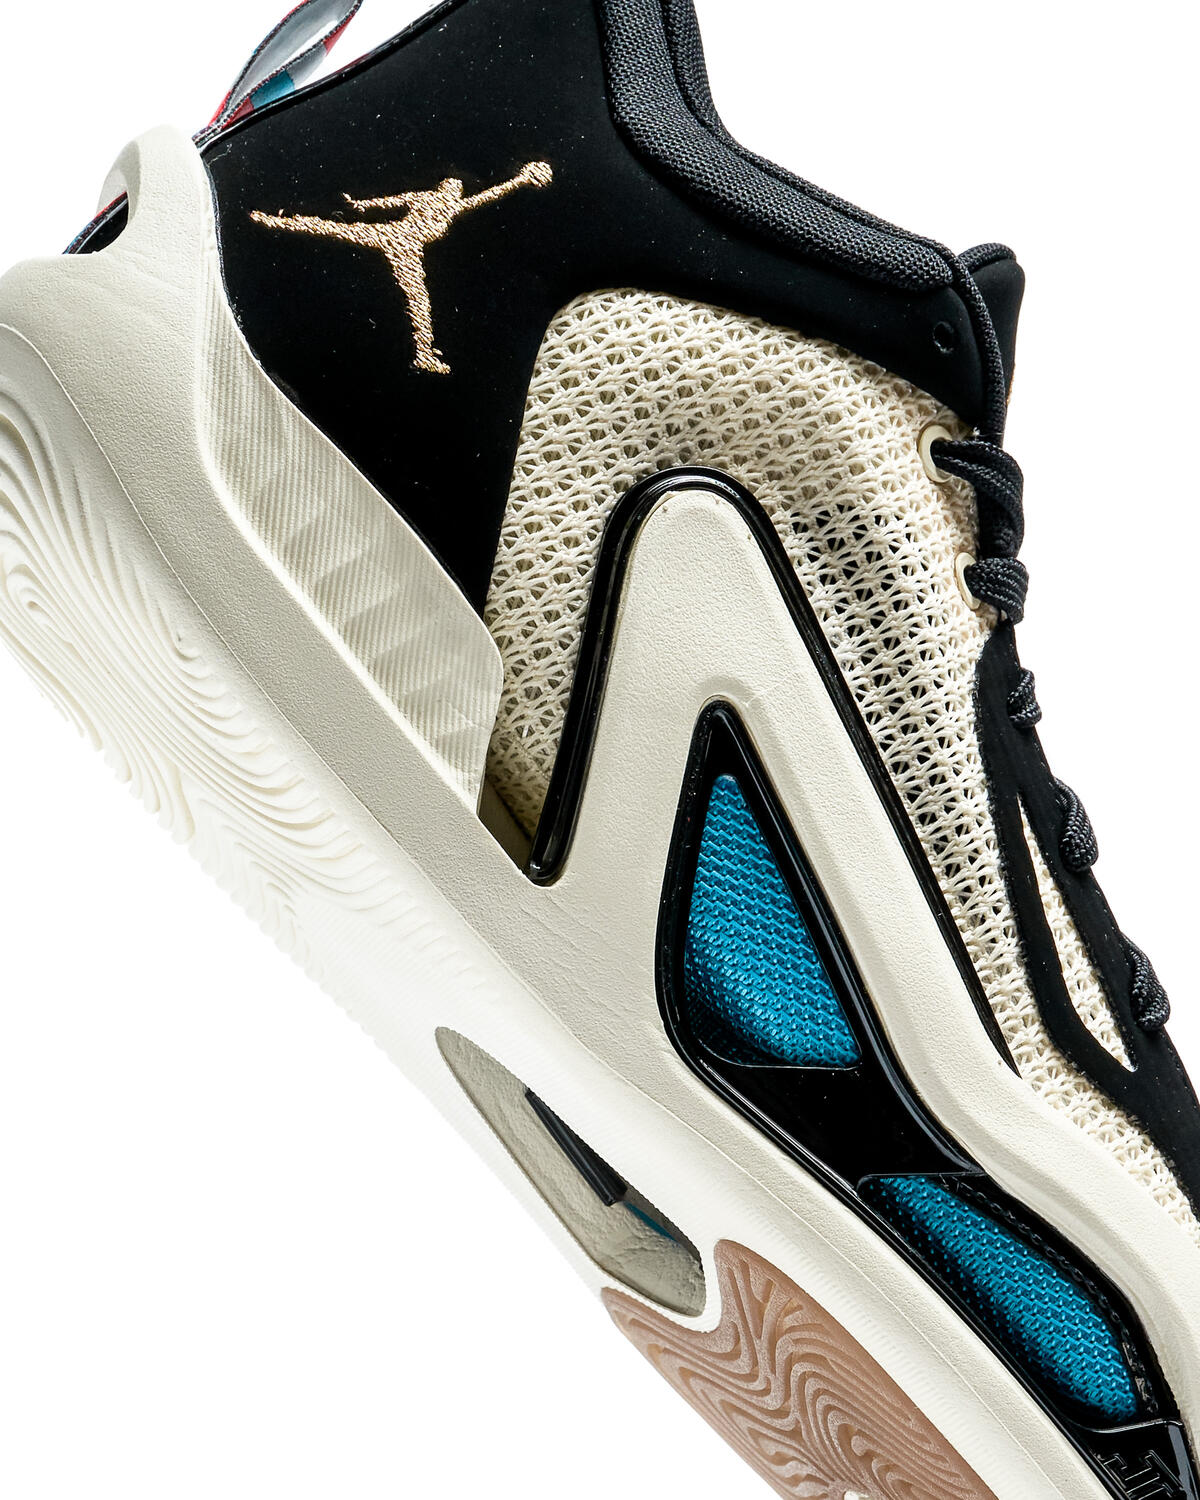 What Pros Wear: Jayson Tatum's Jordan Jumpman Diamond Shoes - What Pros Wear